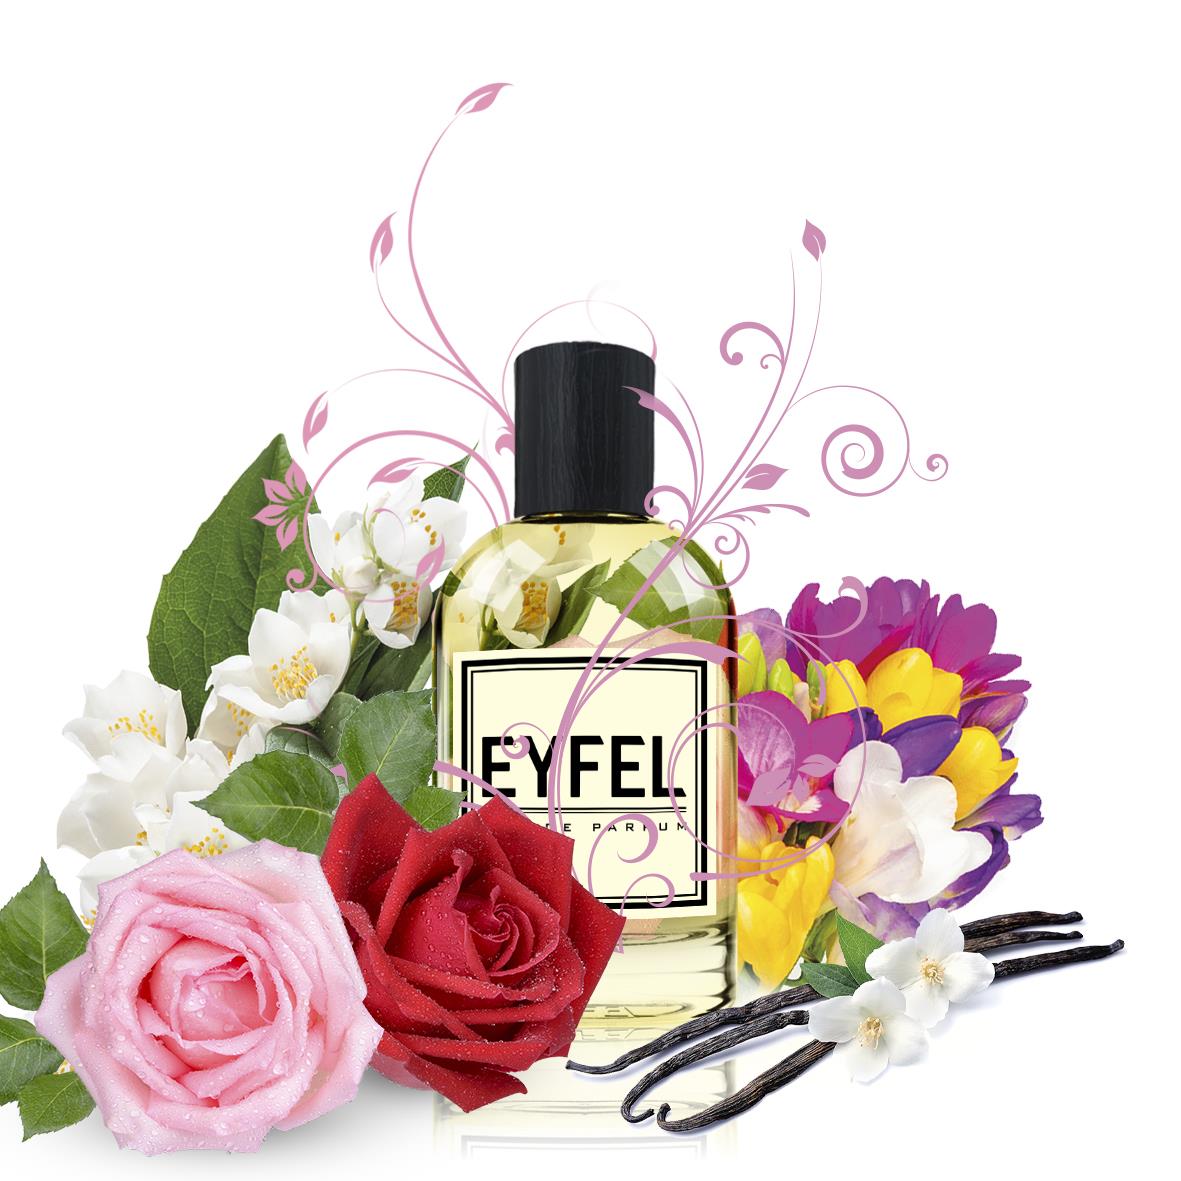 Eyfel perfume - Аромат под кодом W-4 Chanel Candy это